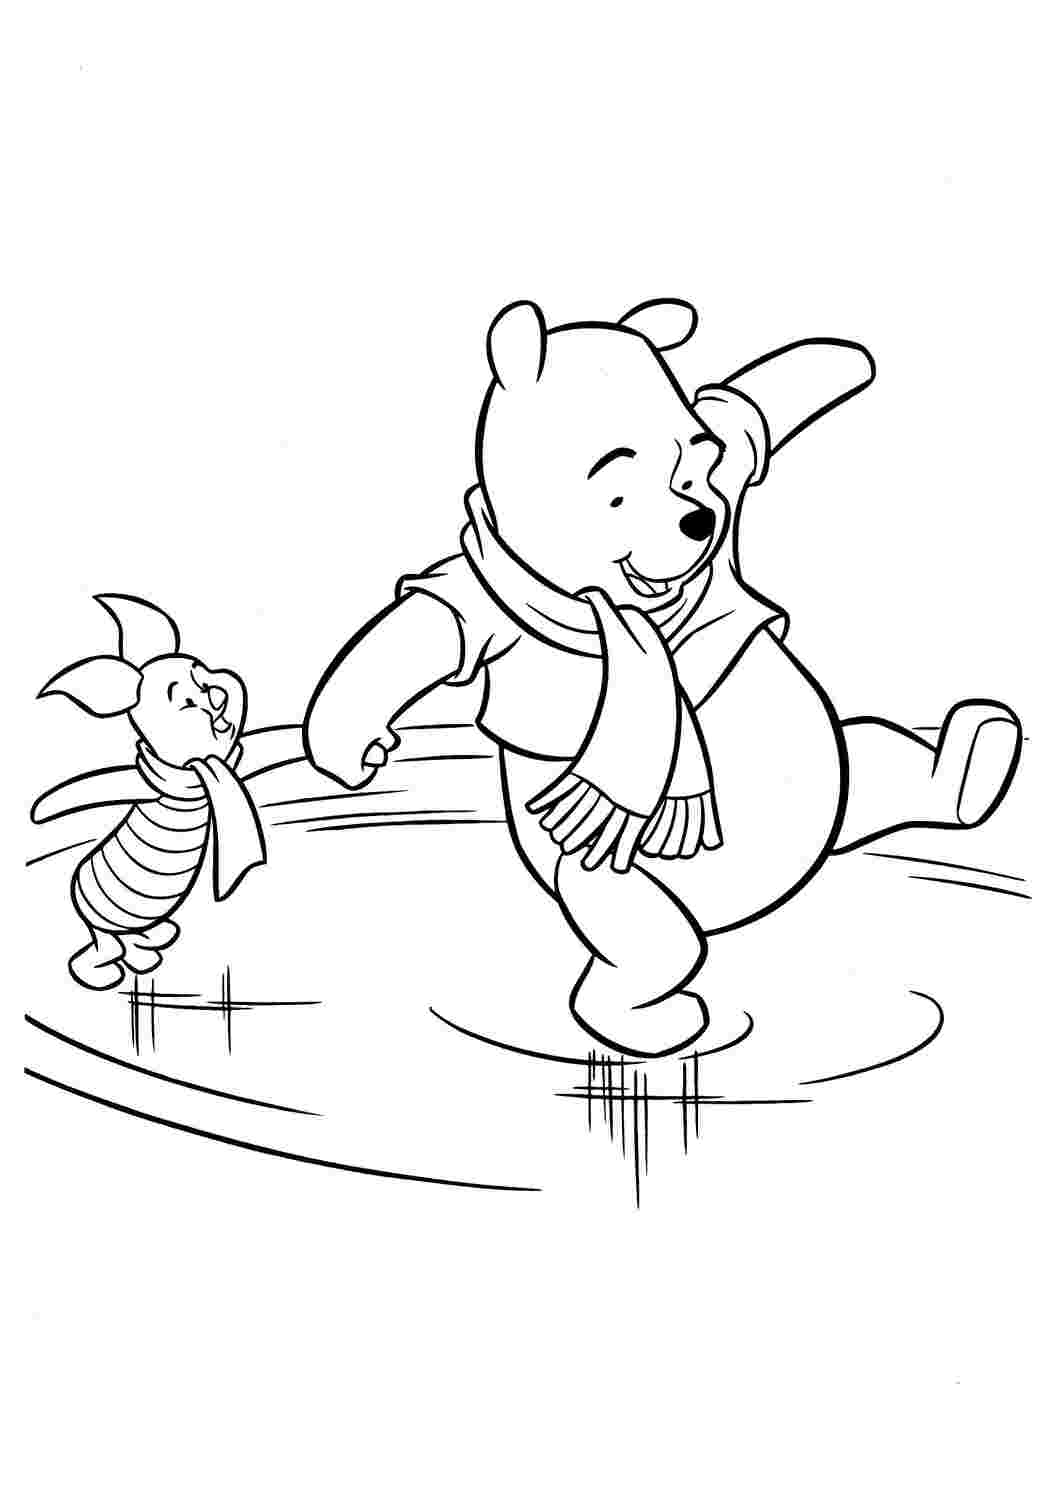 Раскраски Винни Пух и Пятачок на льду герои сказок винни пух и пятачок